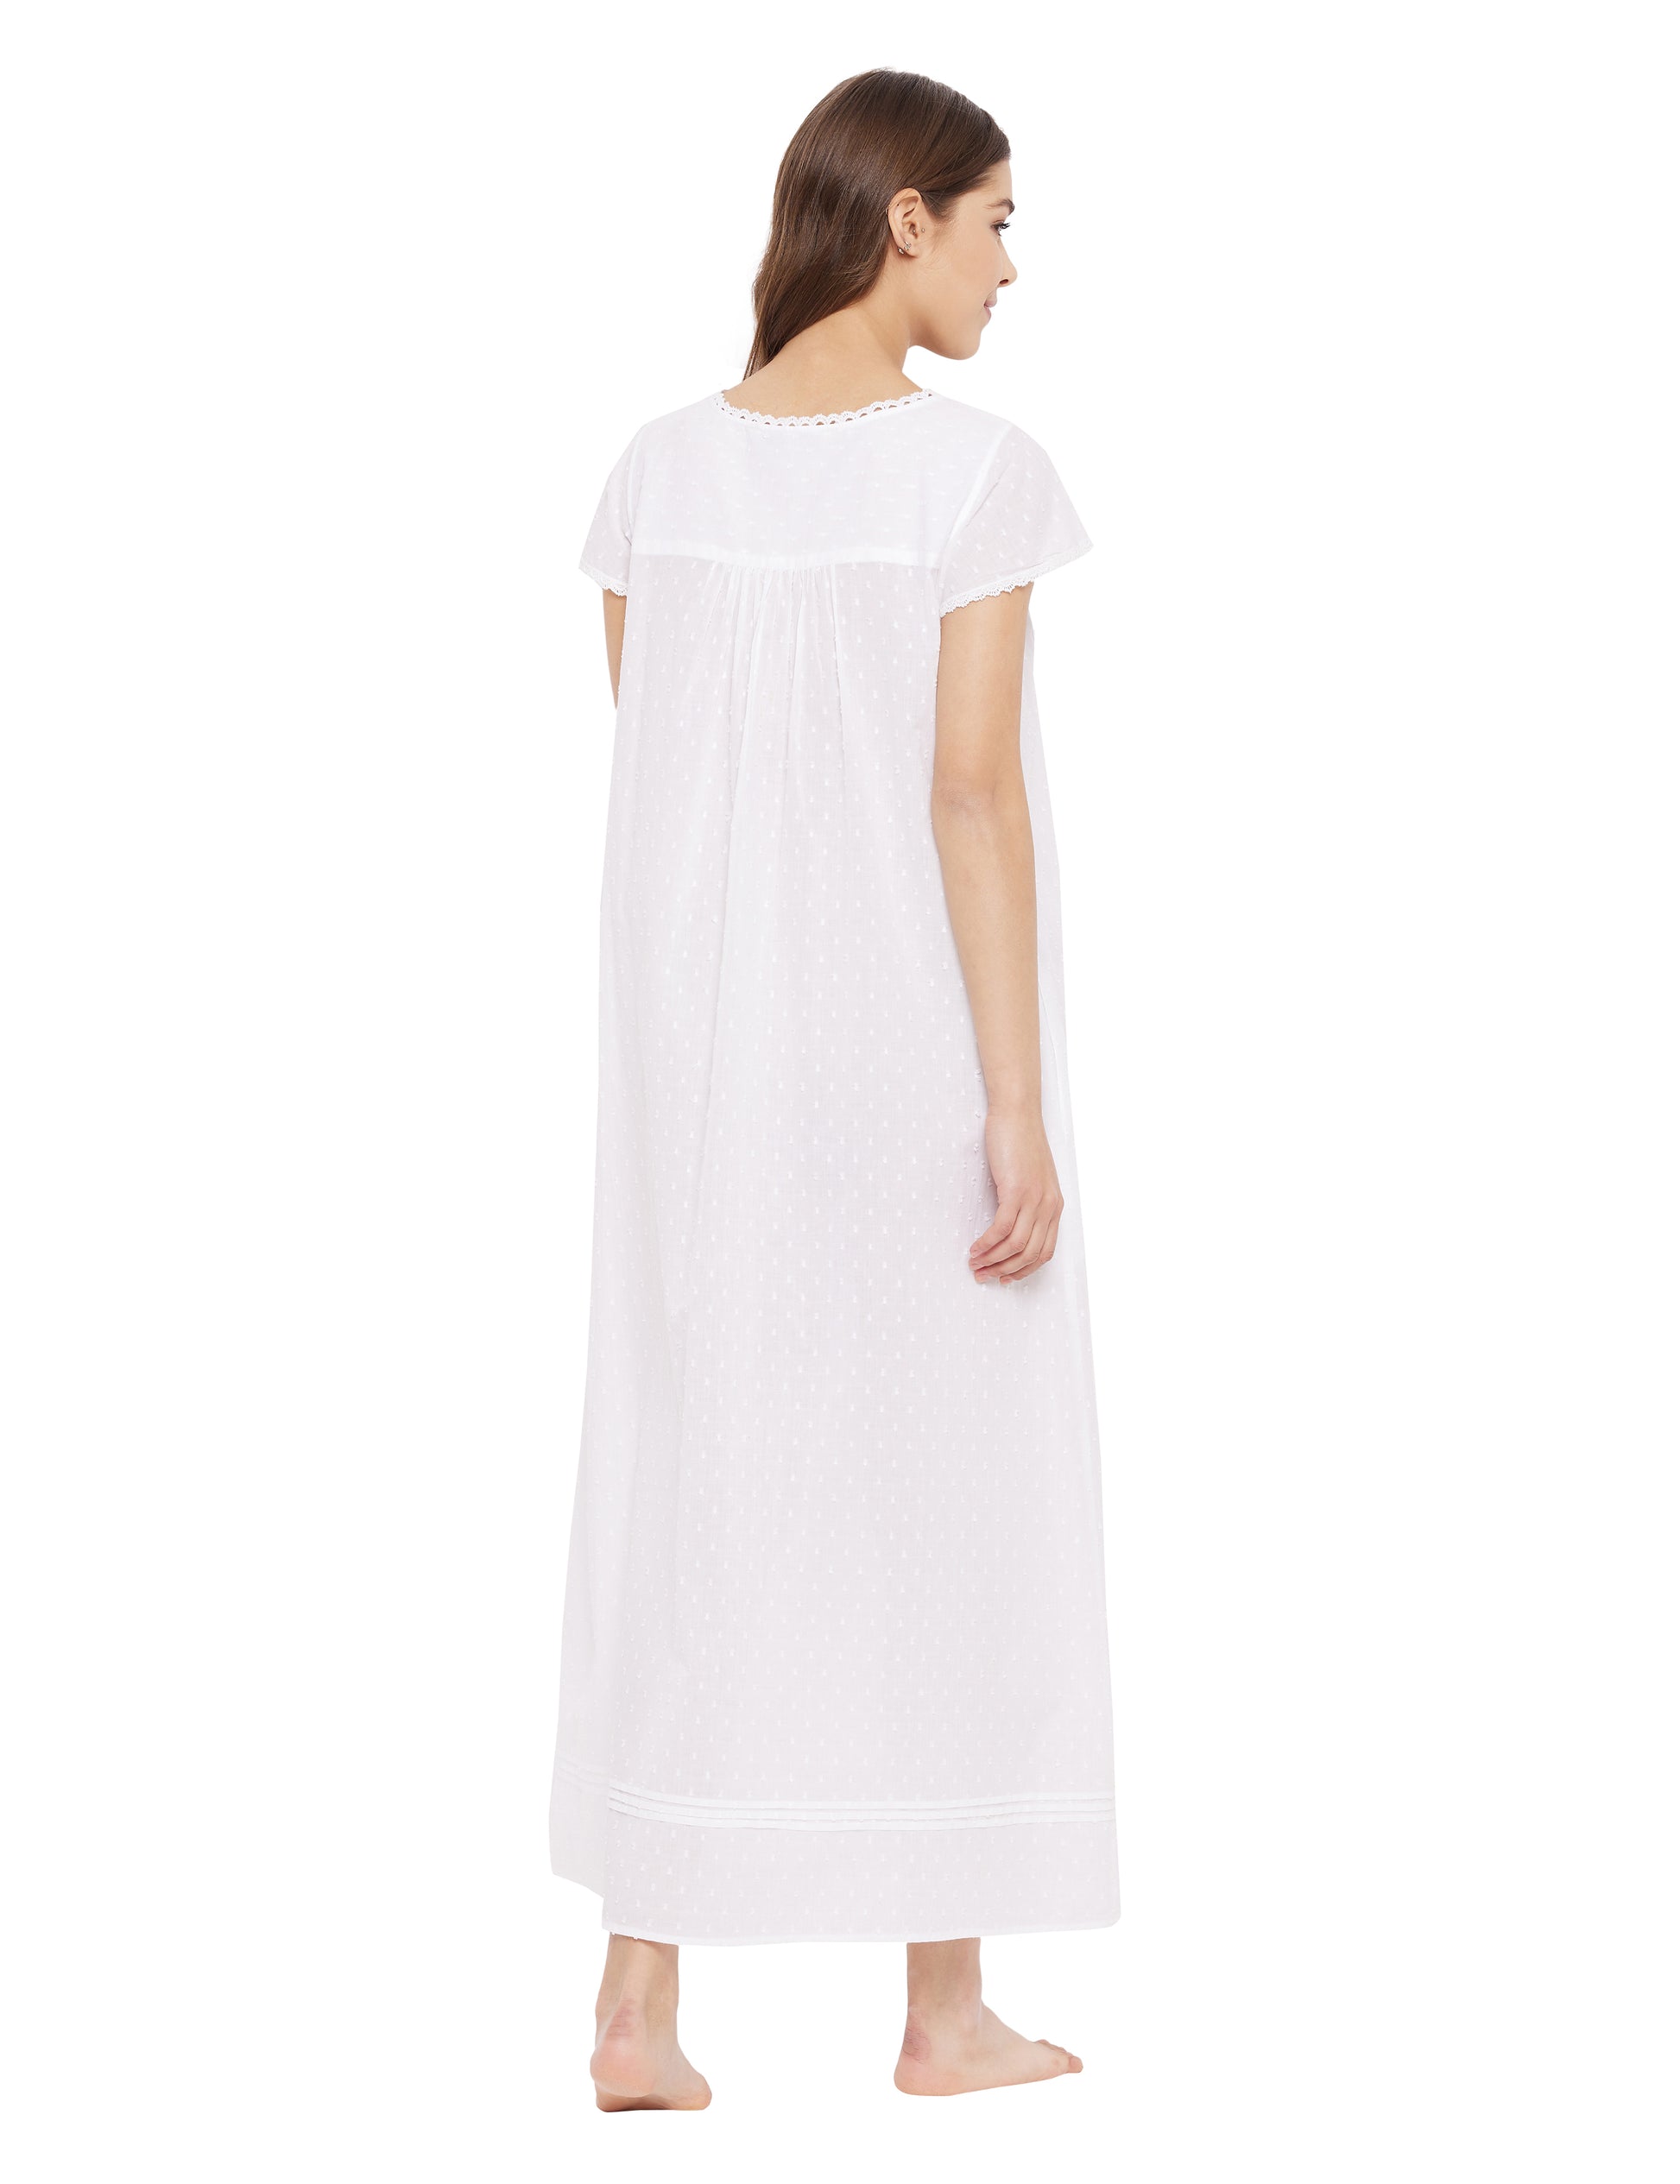 Sofia Cotton Lace Maxi Dress Gown  34.00 Indigo Paisley